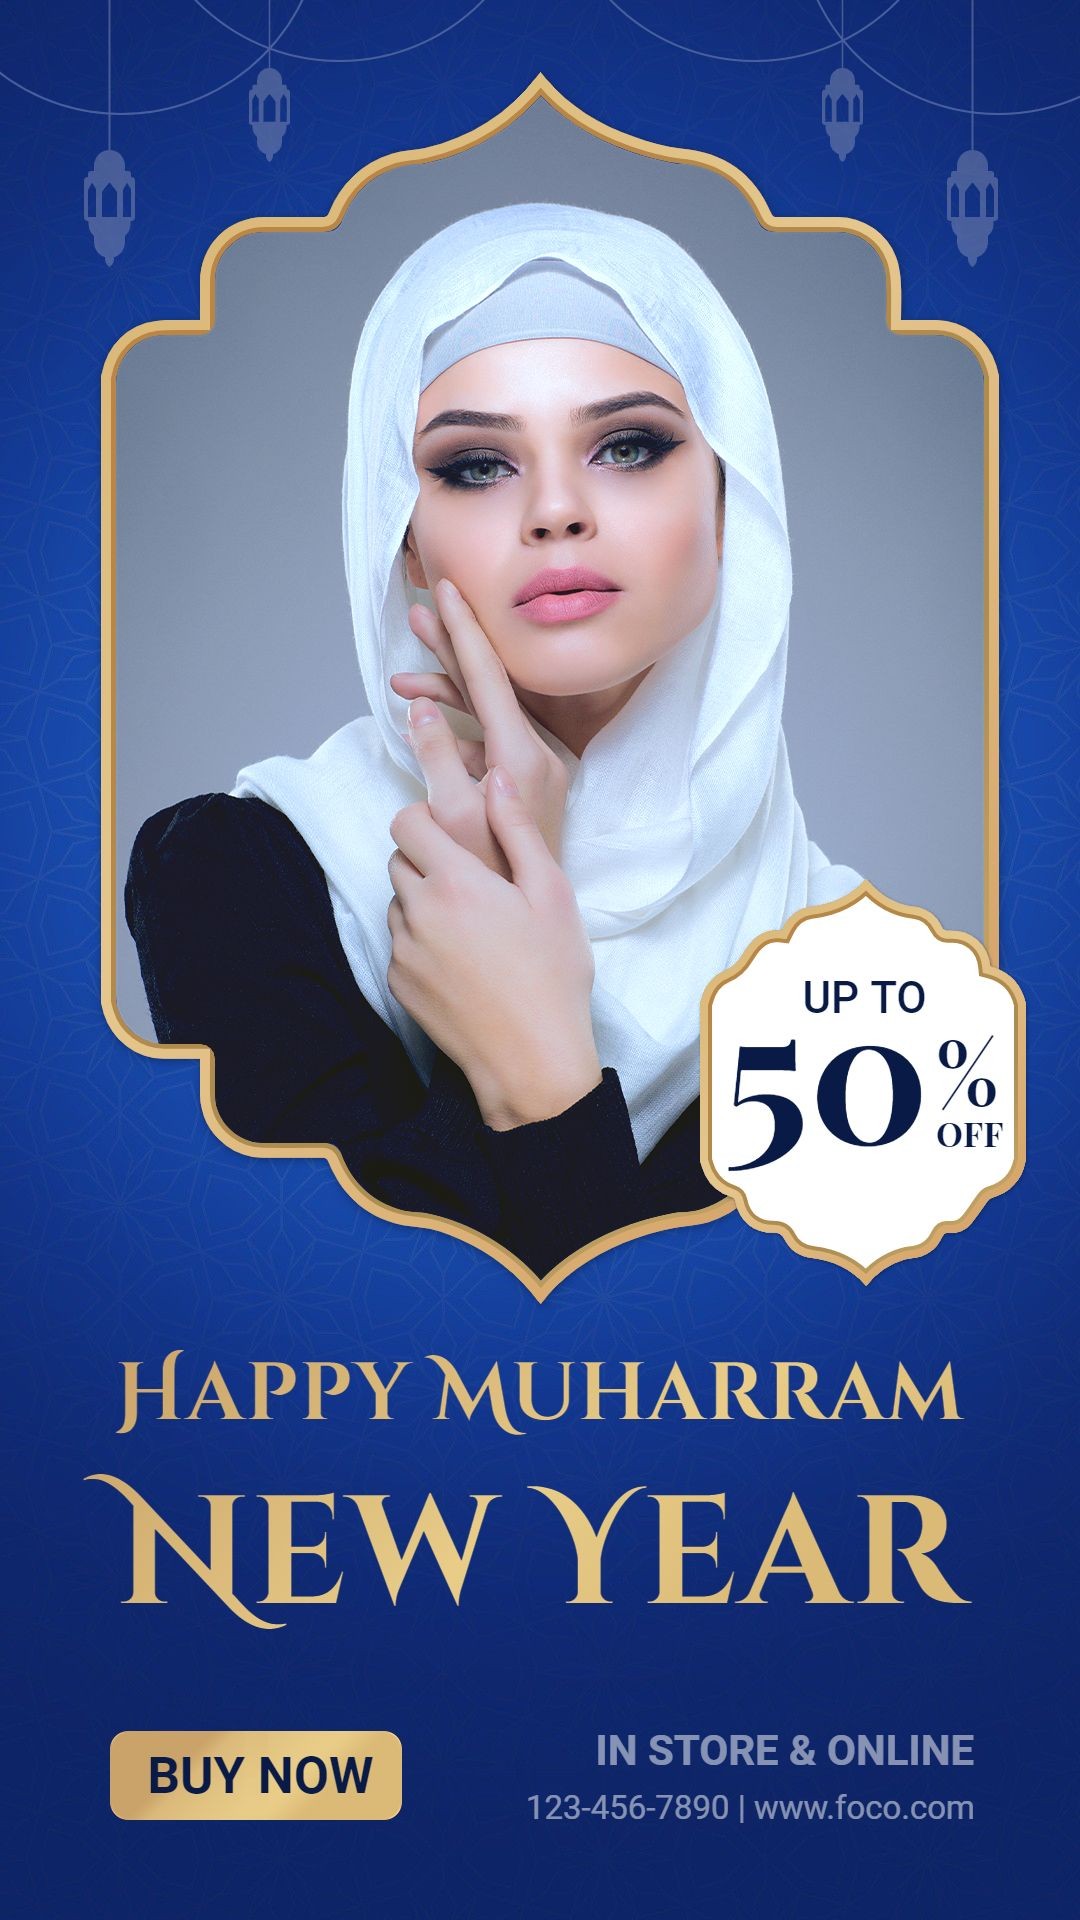 Muharram Islamic New Year Women's Fashion Sale Discount Promo Ecommerce Story